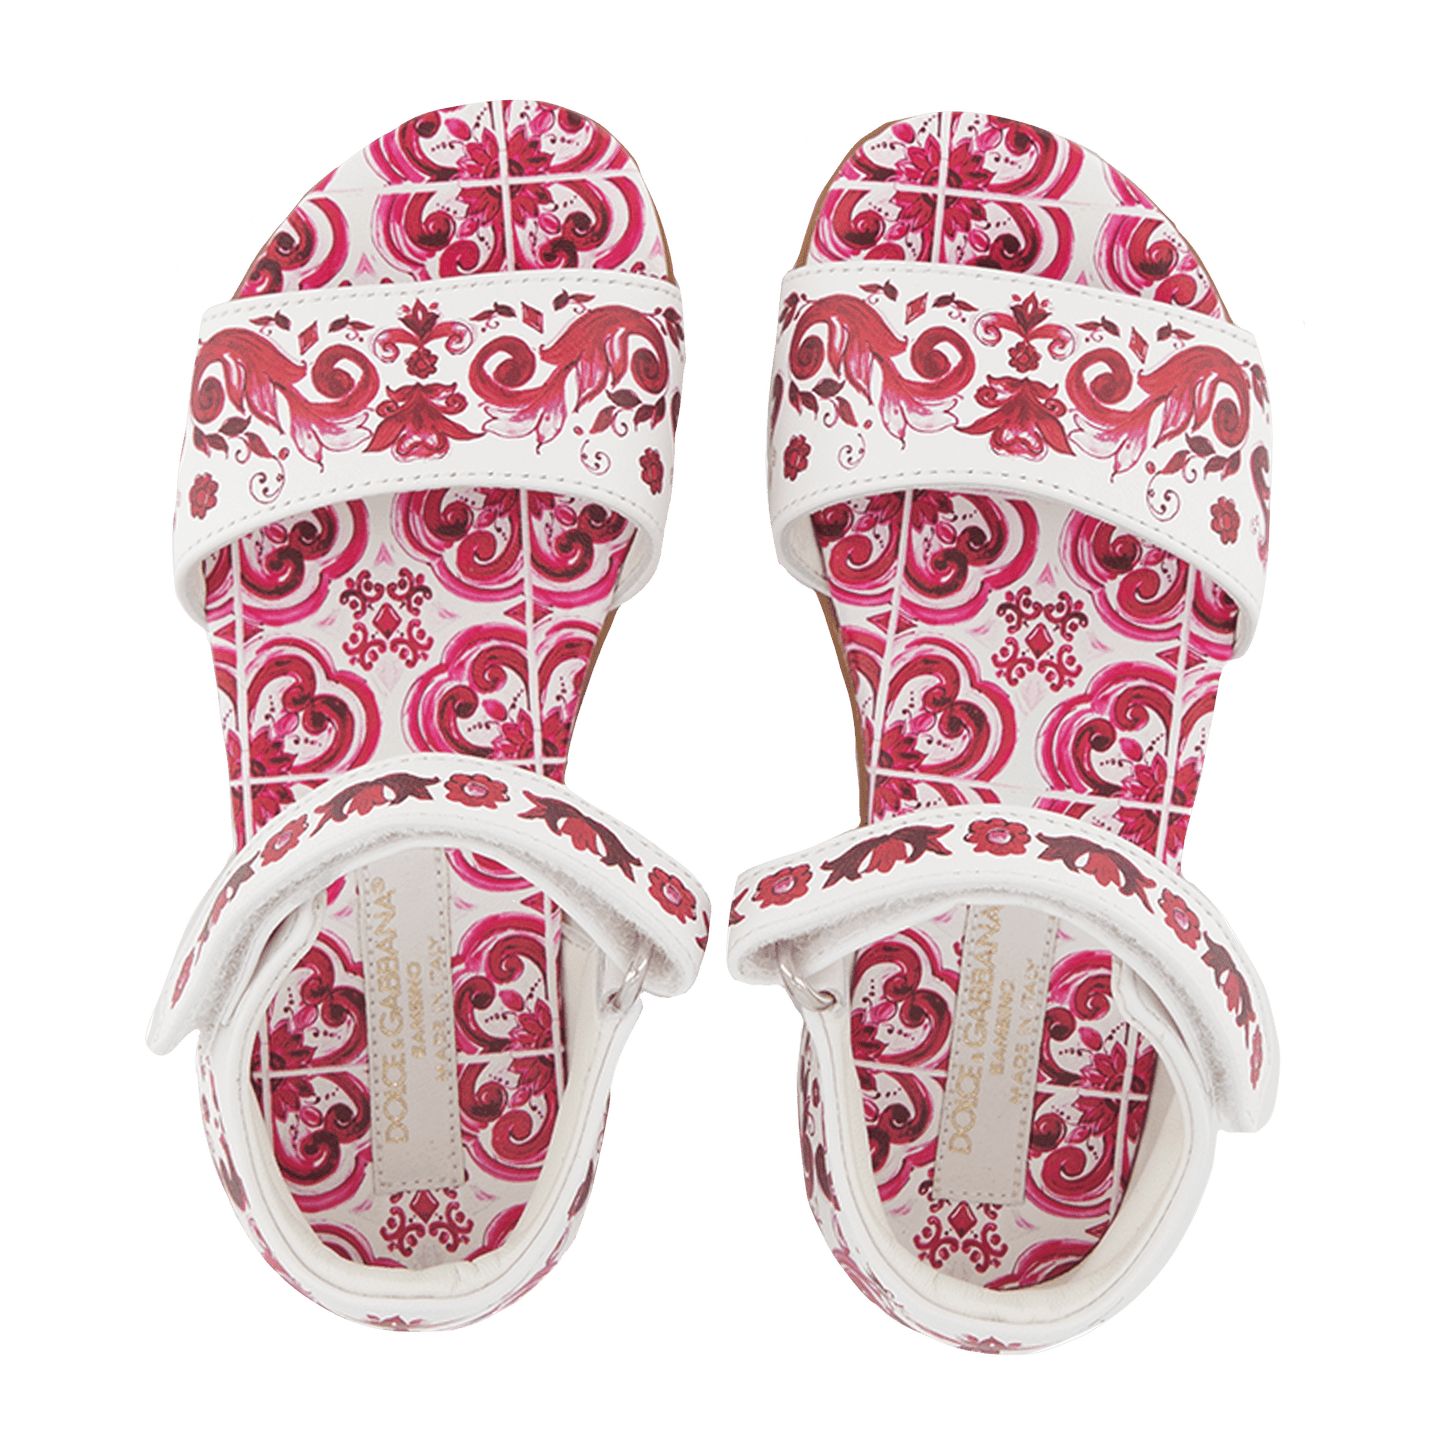 Dolce & Gabbana Kinder Meisjes Sandalen Wit 19